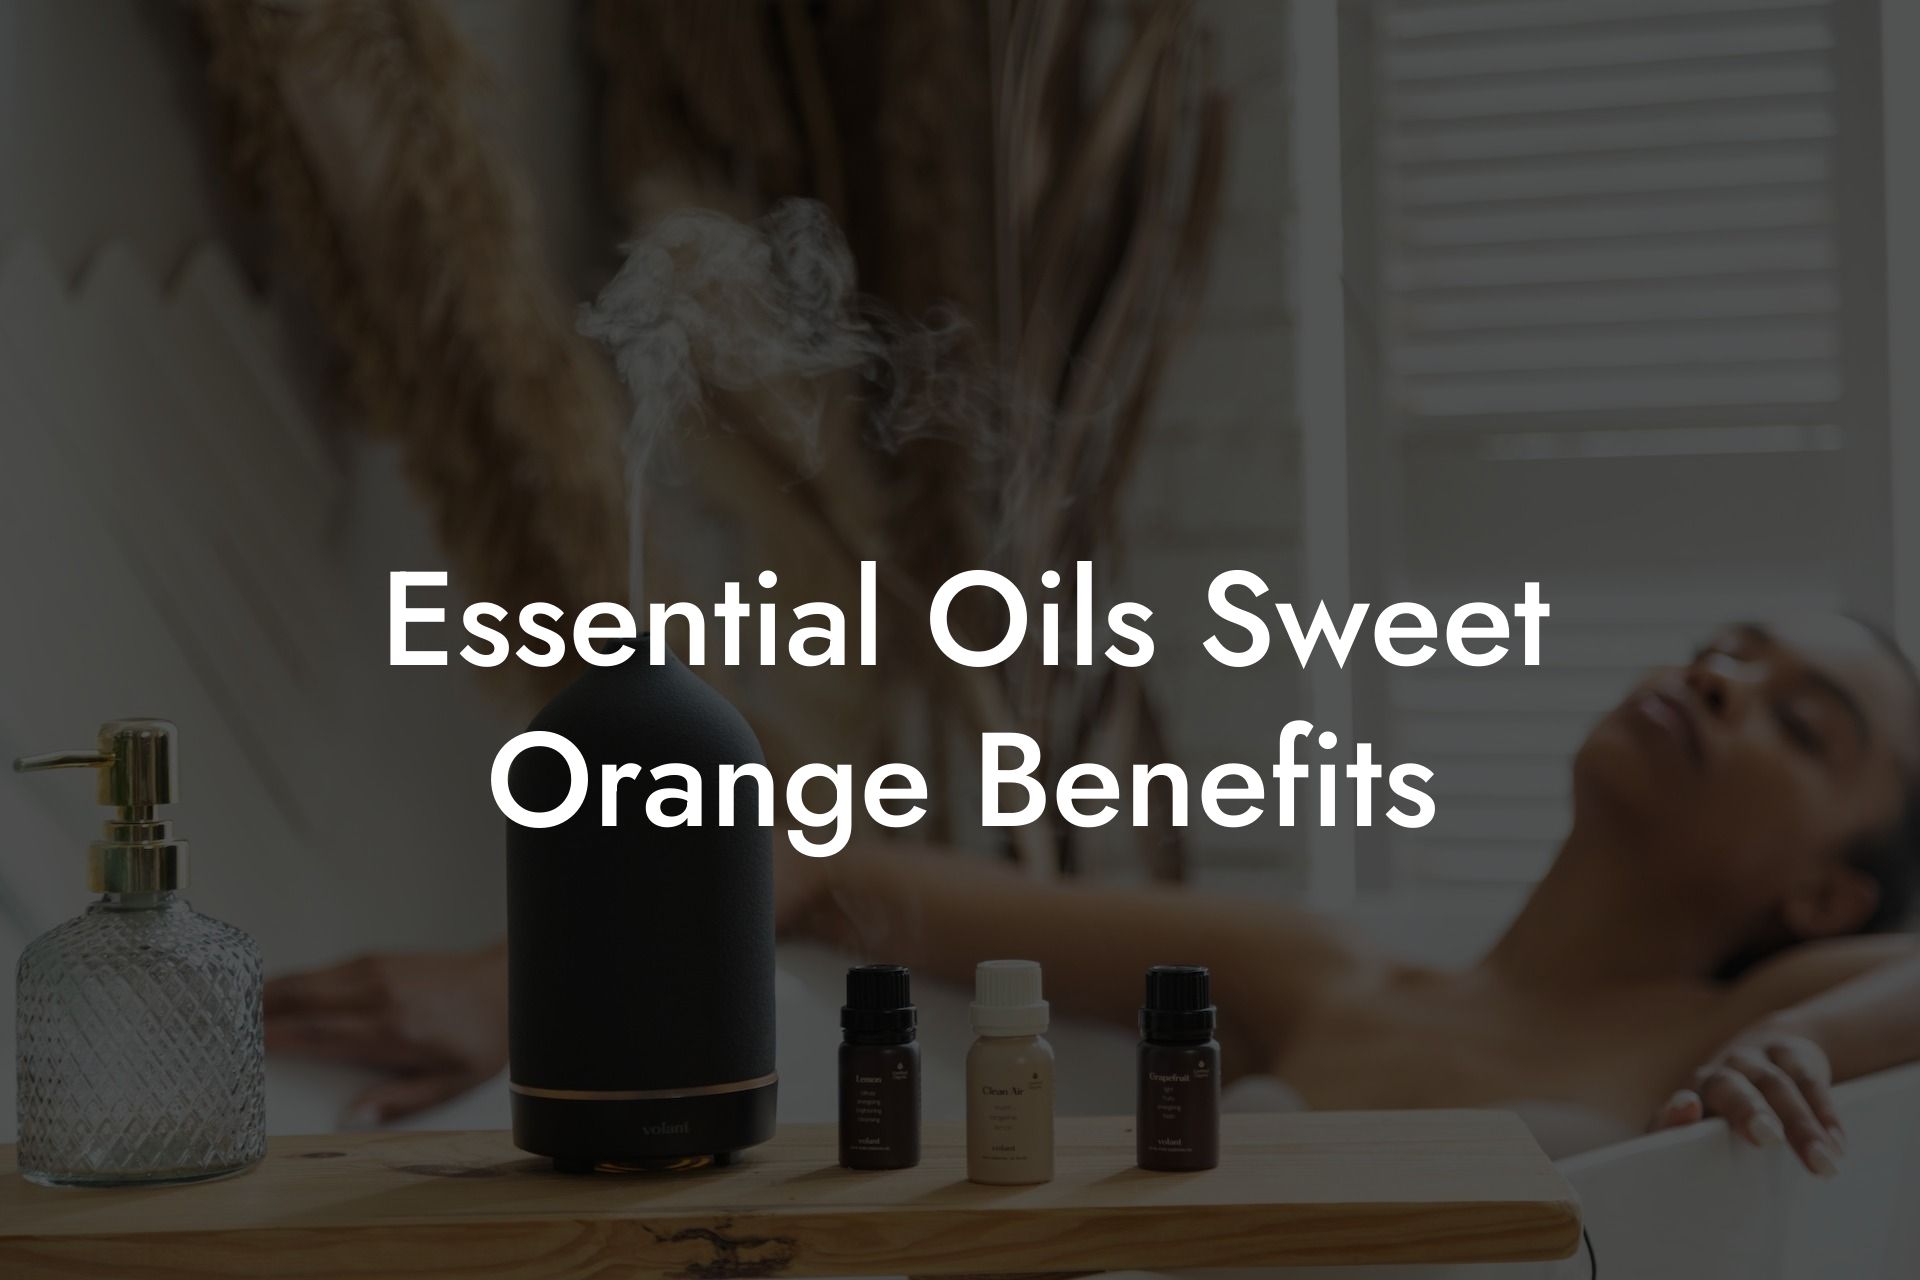 Essential Oils Sweet Orange Benefits